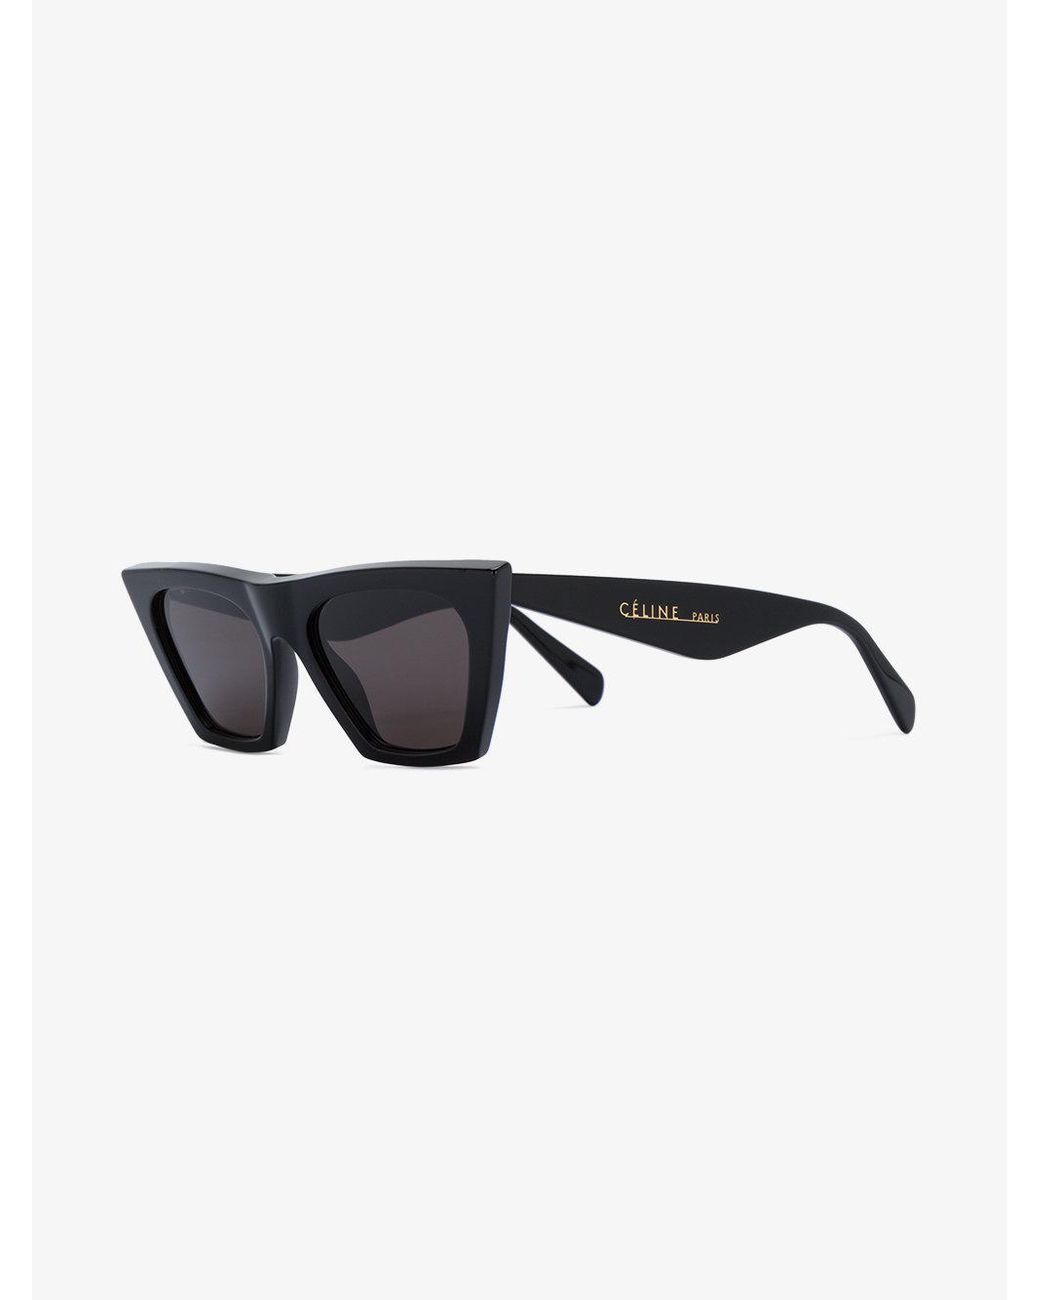 Celine Edge Sunglasses in Black | Lyst